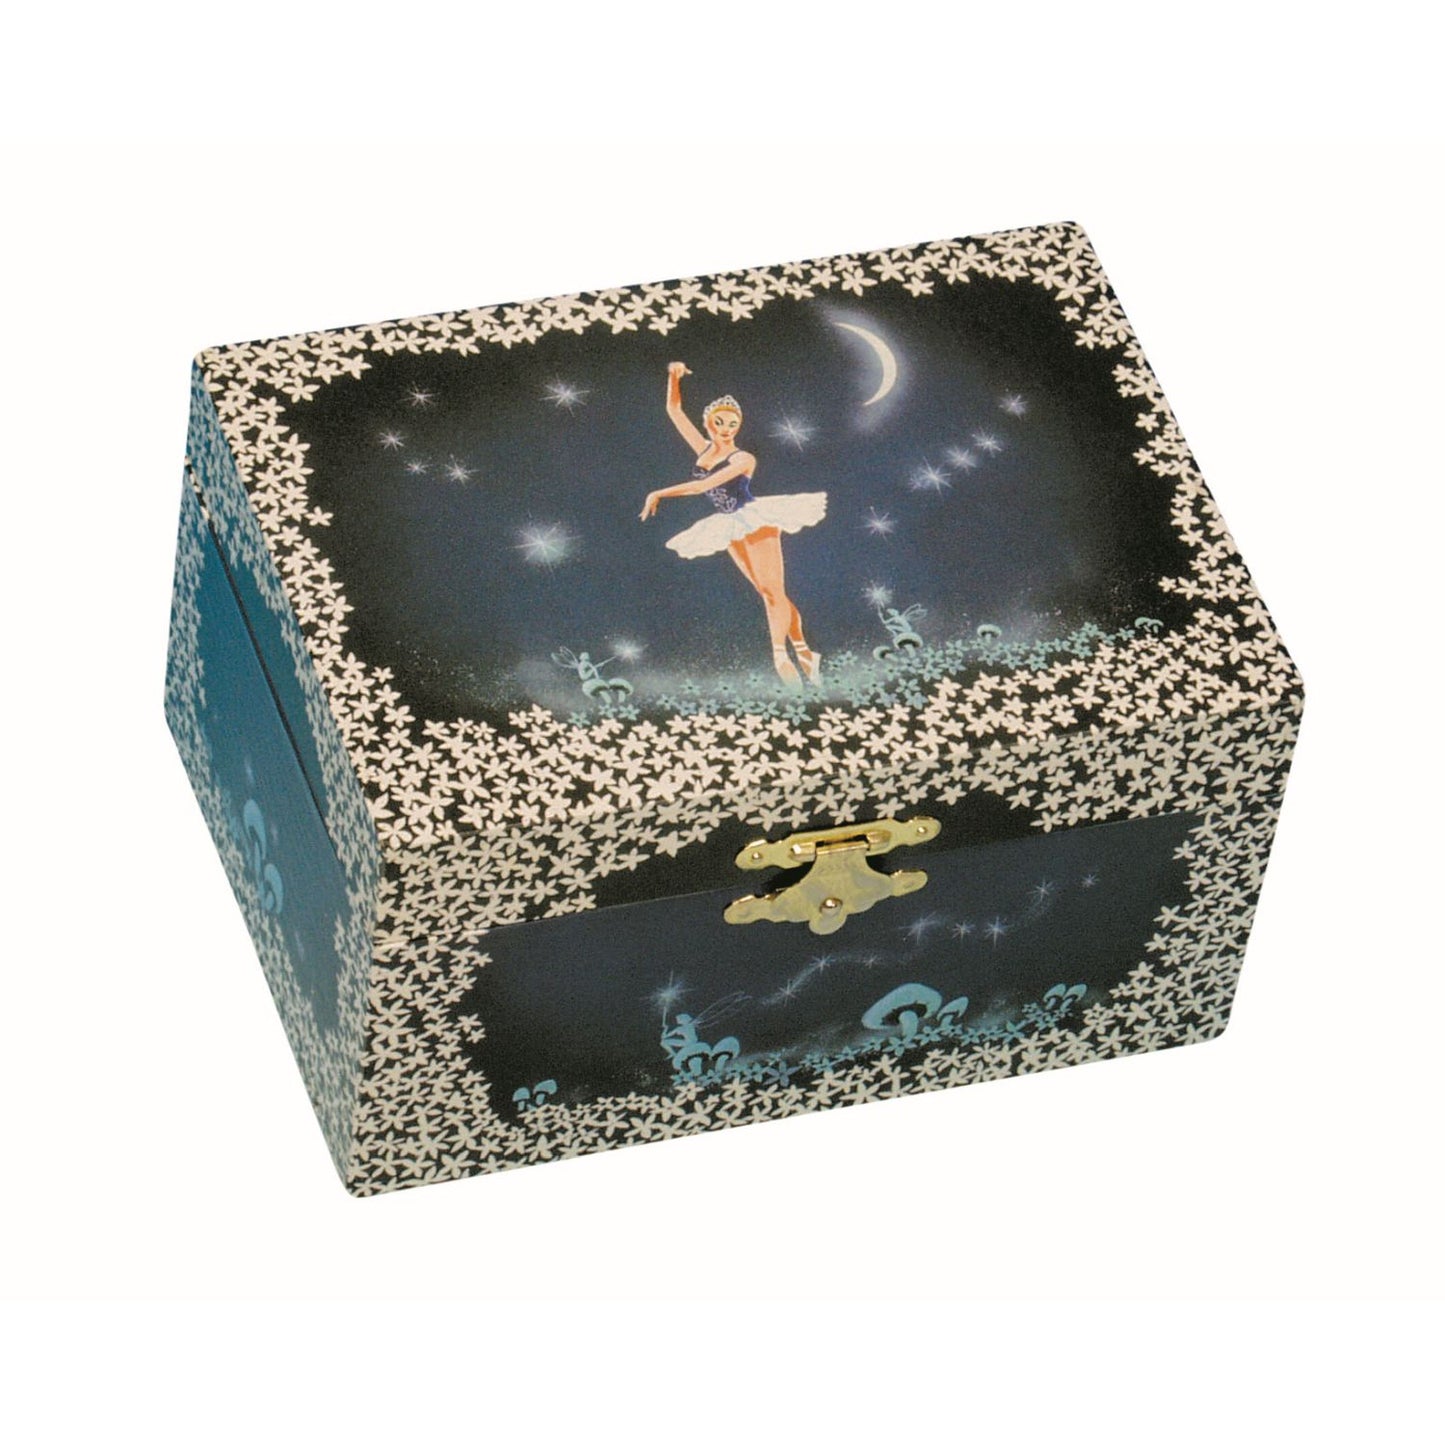 Musicbox Kingdom 5.9" Ballerina Jewelry Box Turns To The Melody “Blue Danube”